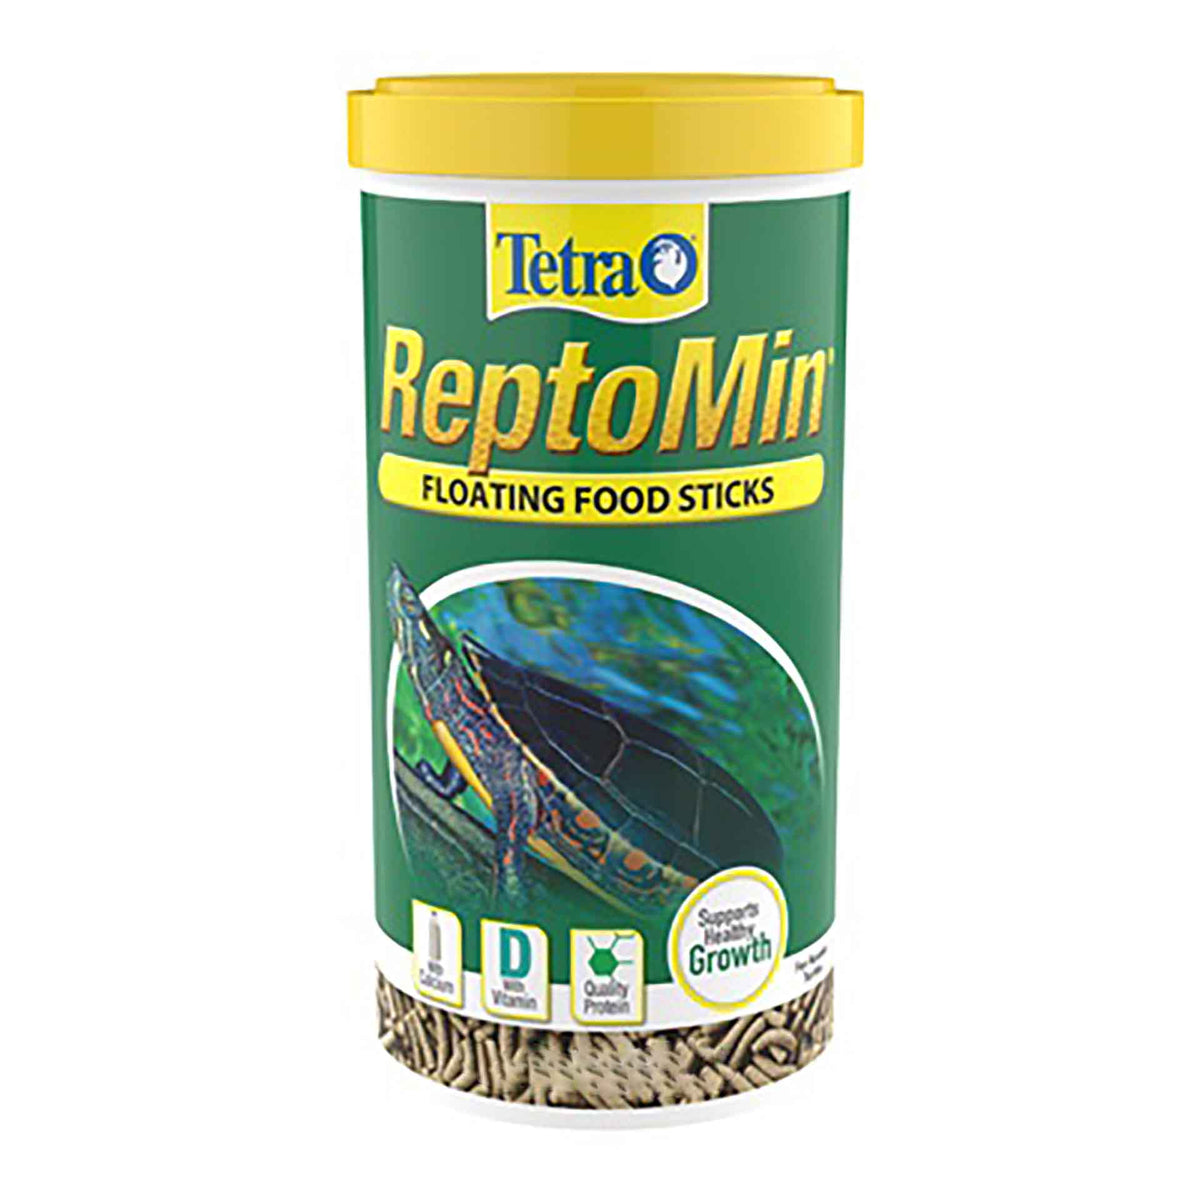 Tetra ReptoMin - 270g Turtle Food Sticks